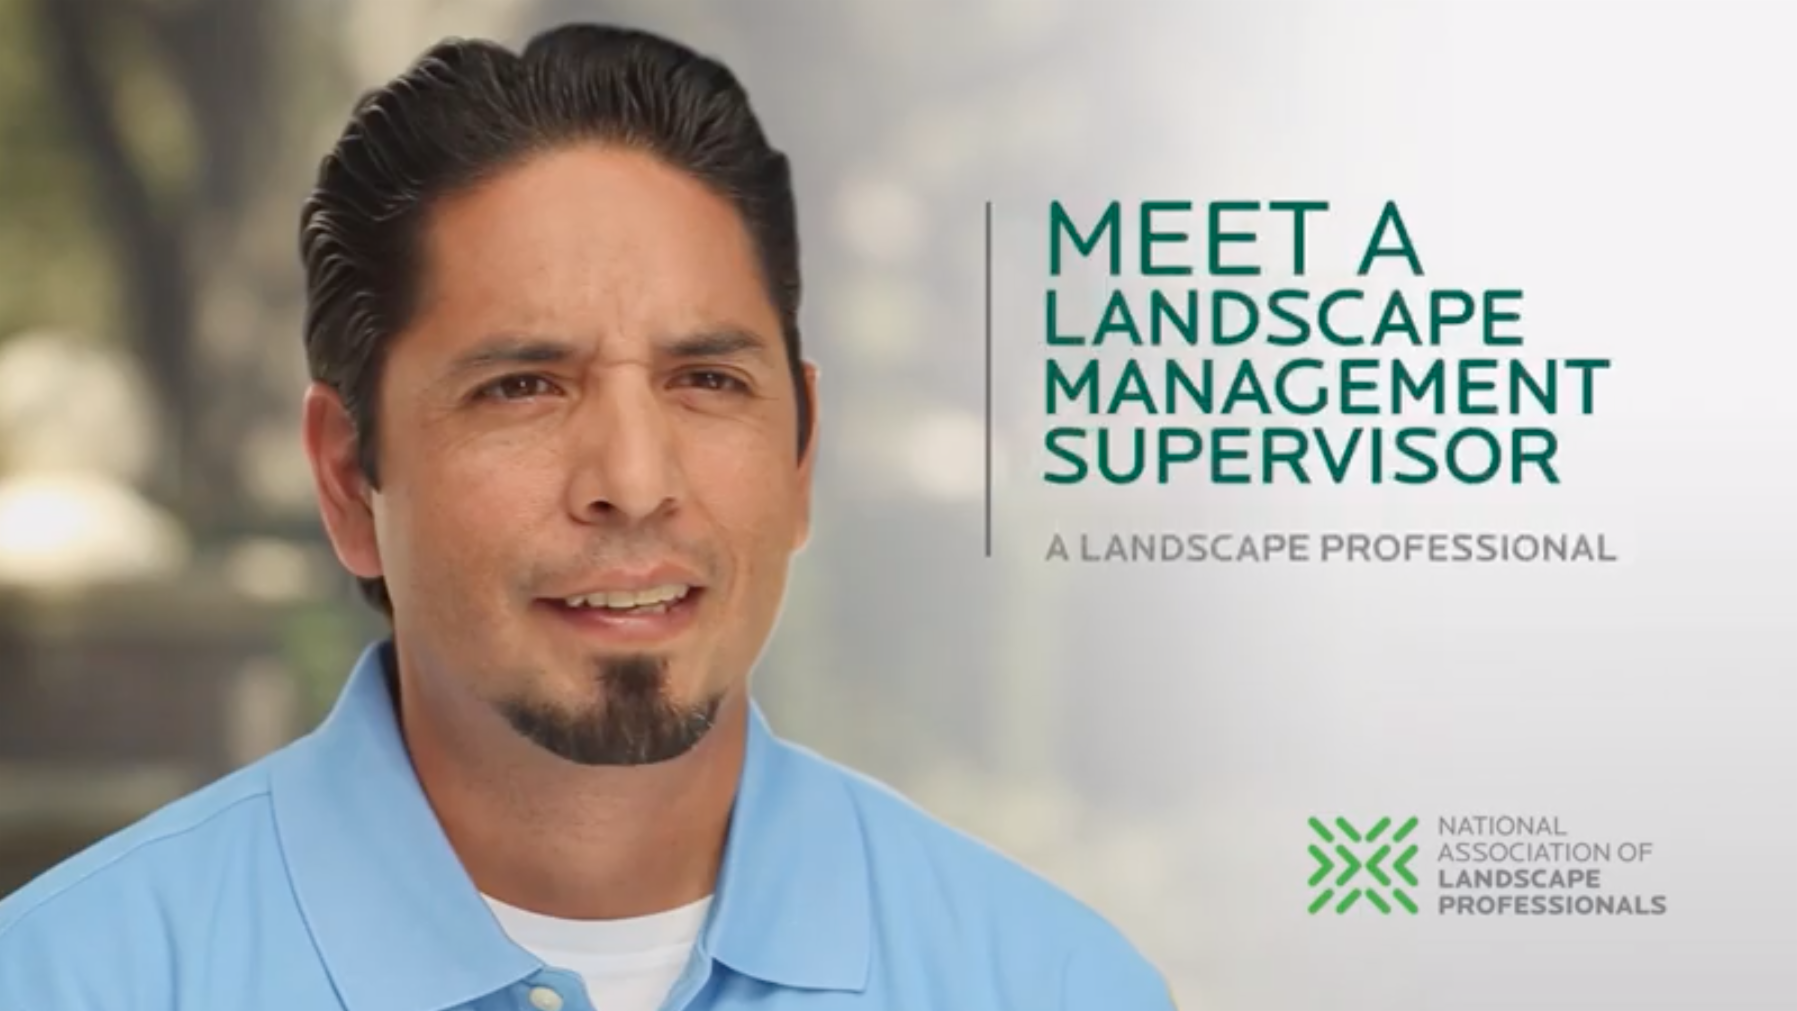 Meet a Landscape Management Supervisor - Landscape Industry Testimonial Videos